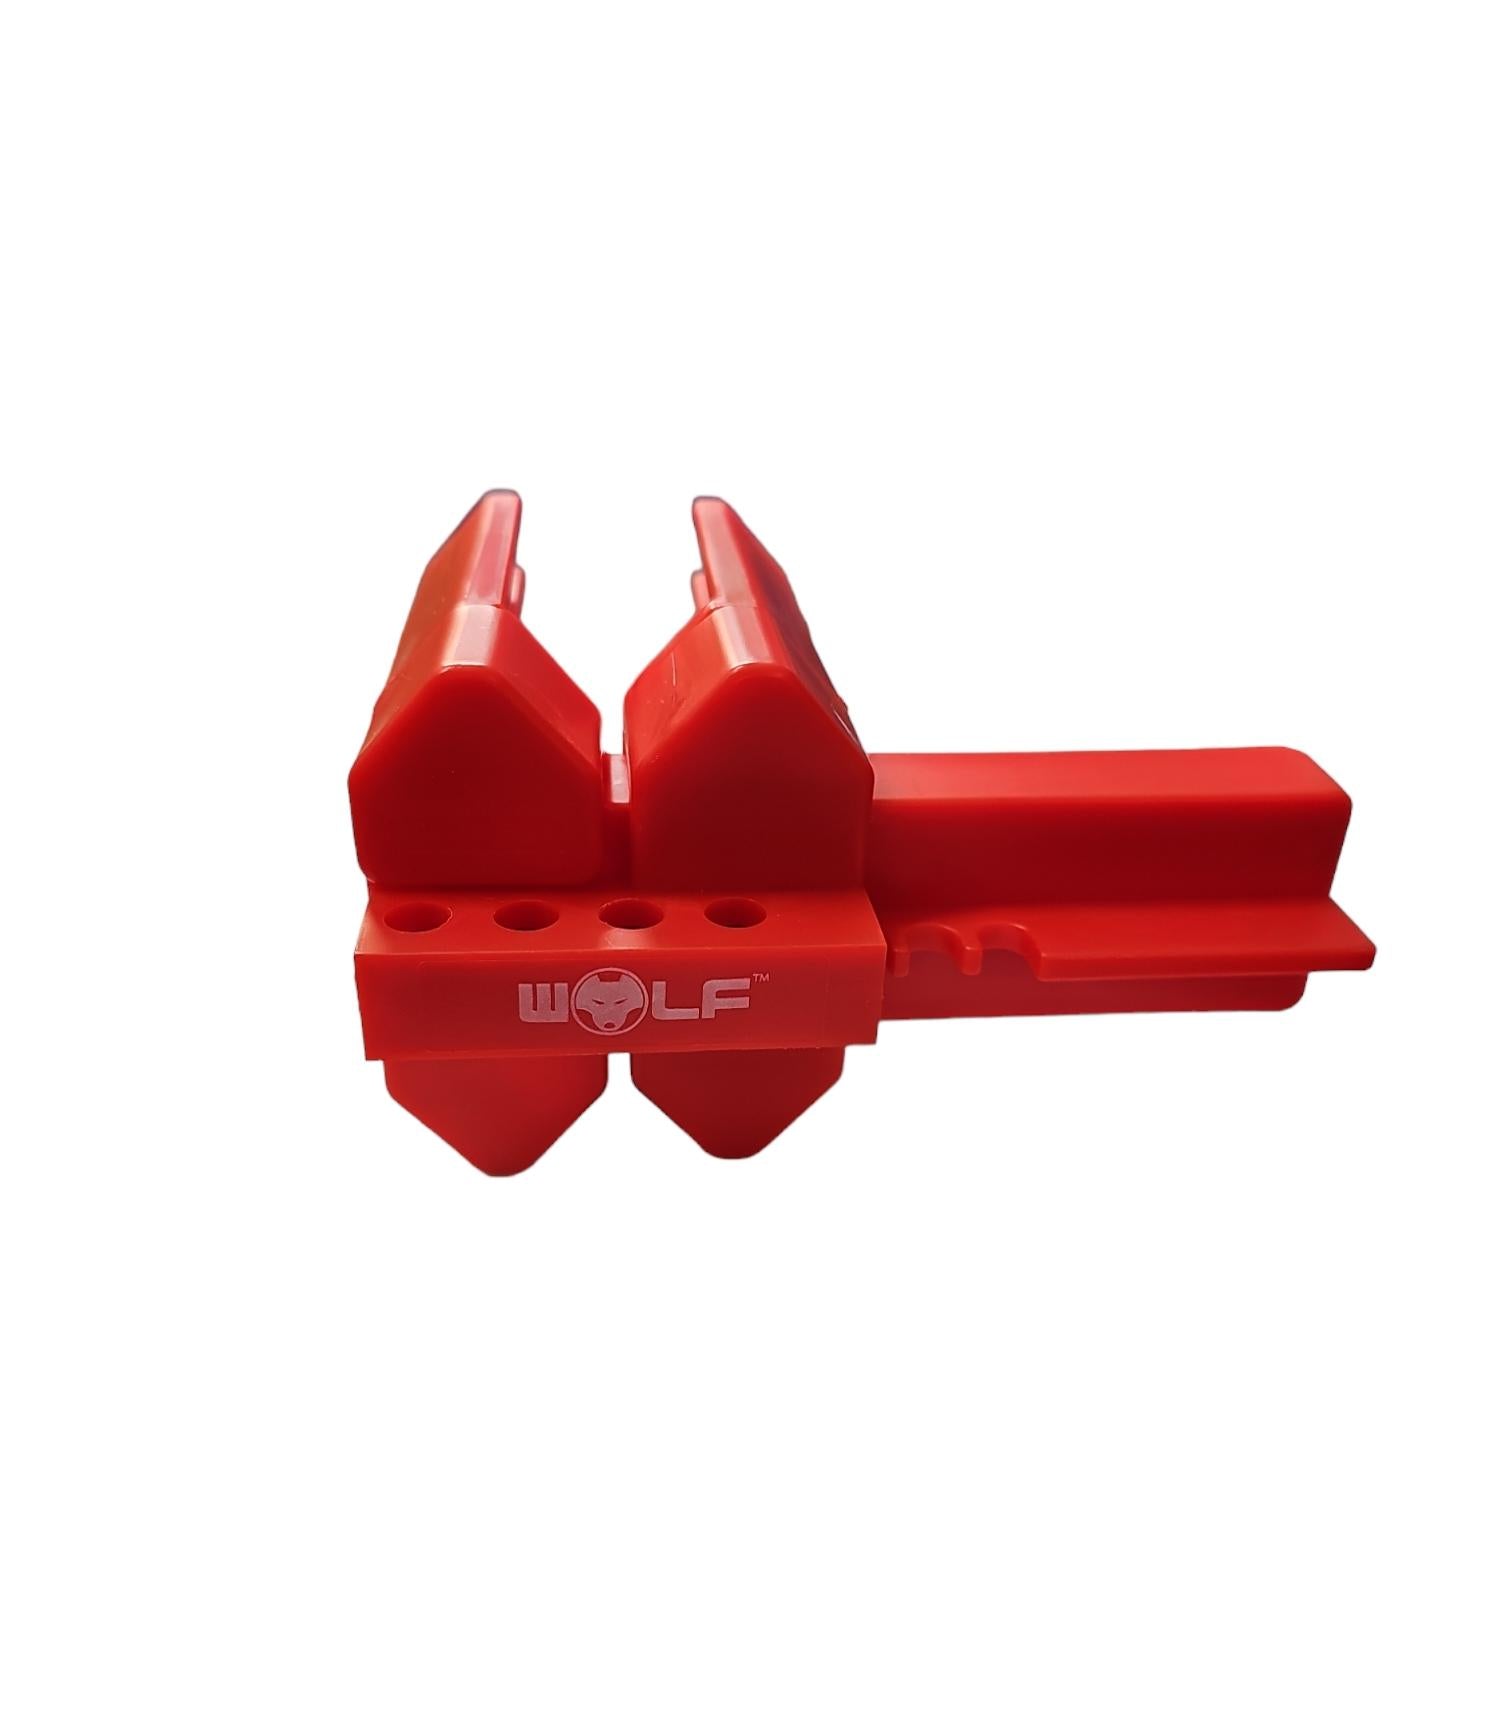 PVC Adjustable hose reel ball valve lock out - Premium  from Firebox Australia - Shop now at Firebox Australia